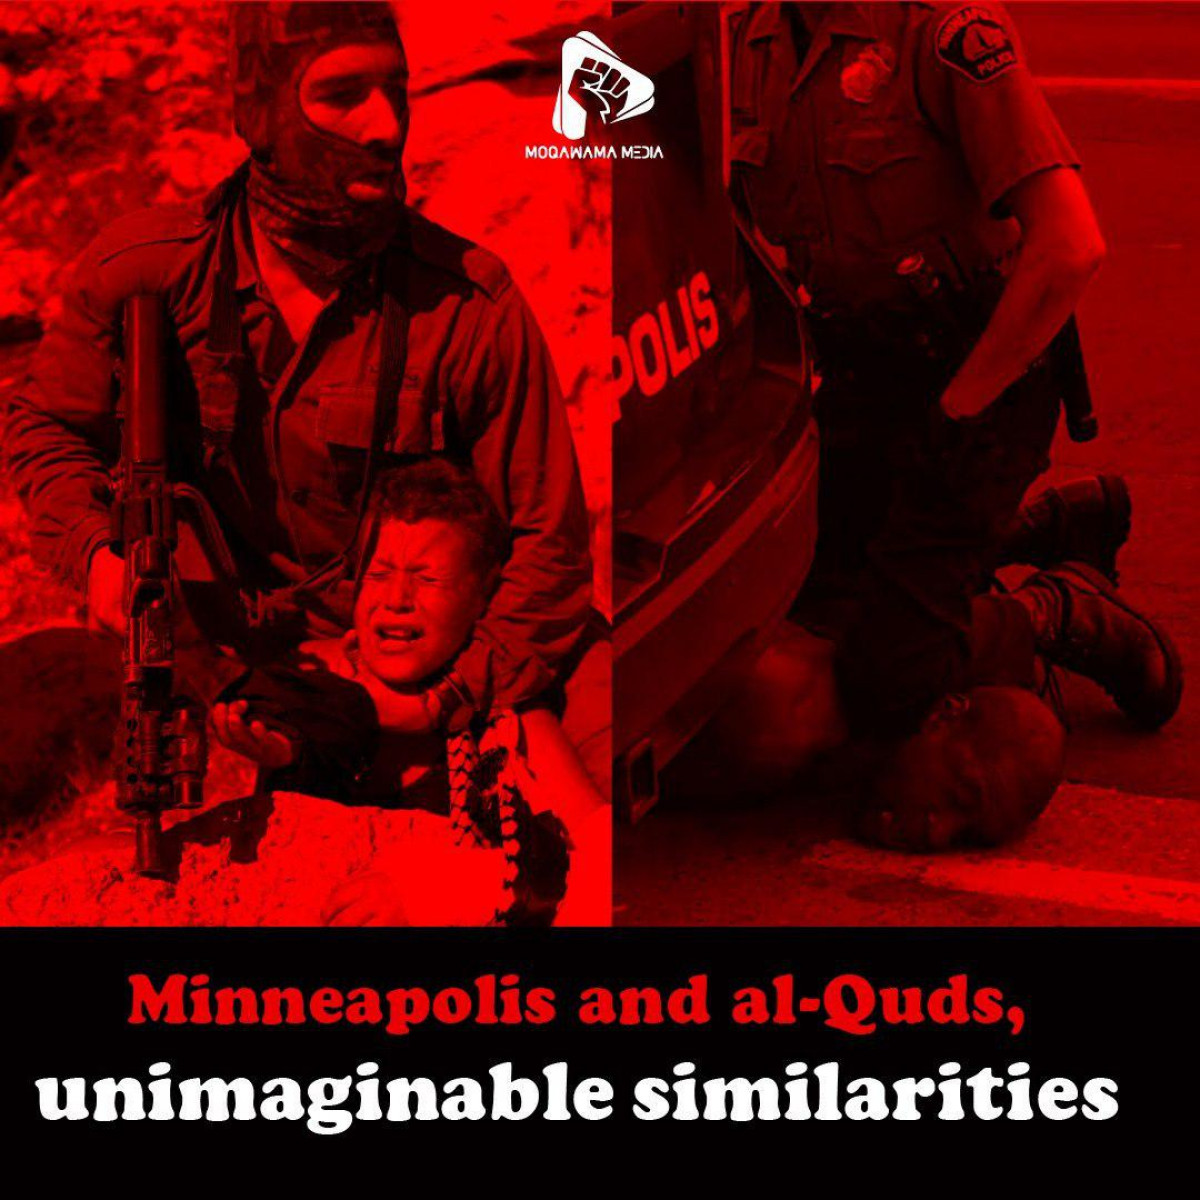 Minneapolis and al-Quds, unimaginable similarities